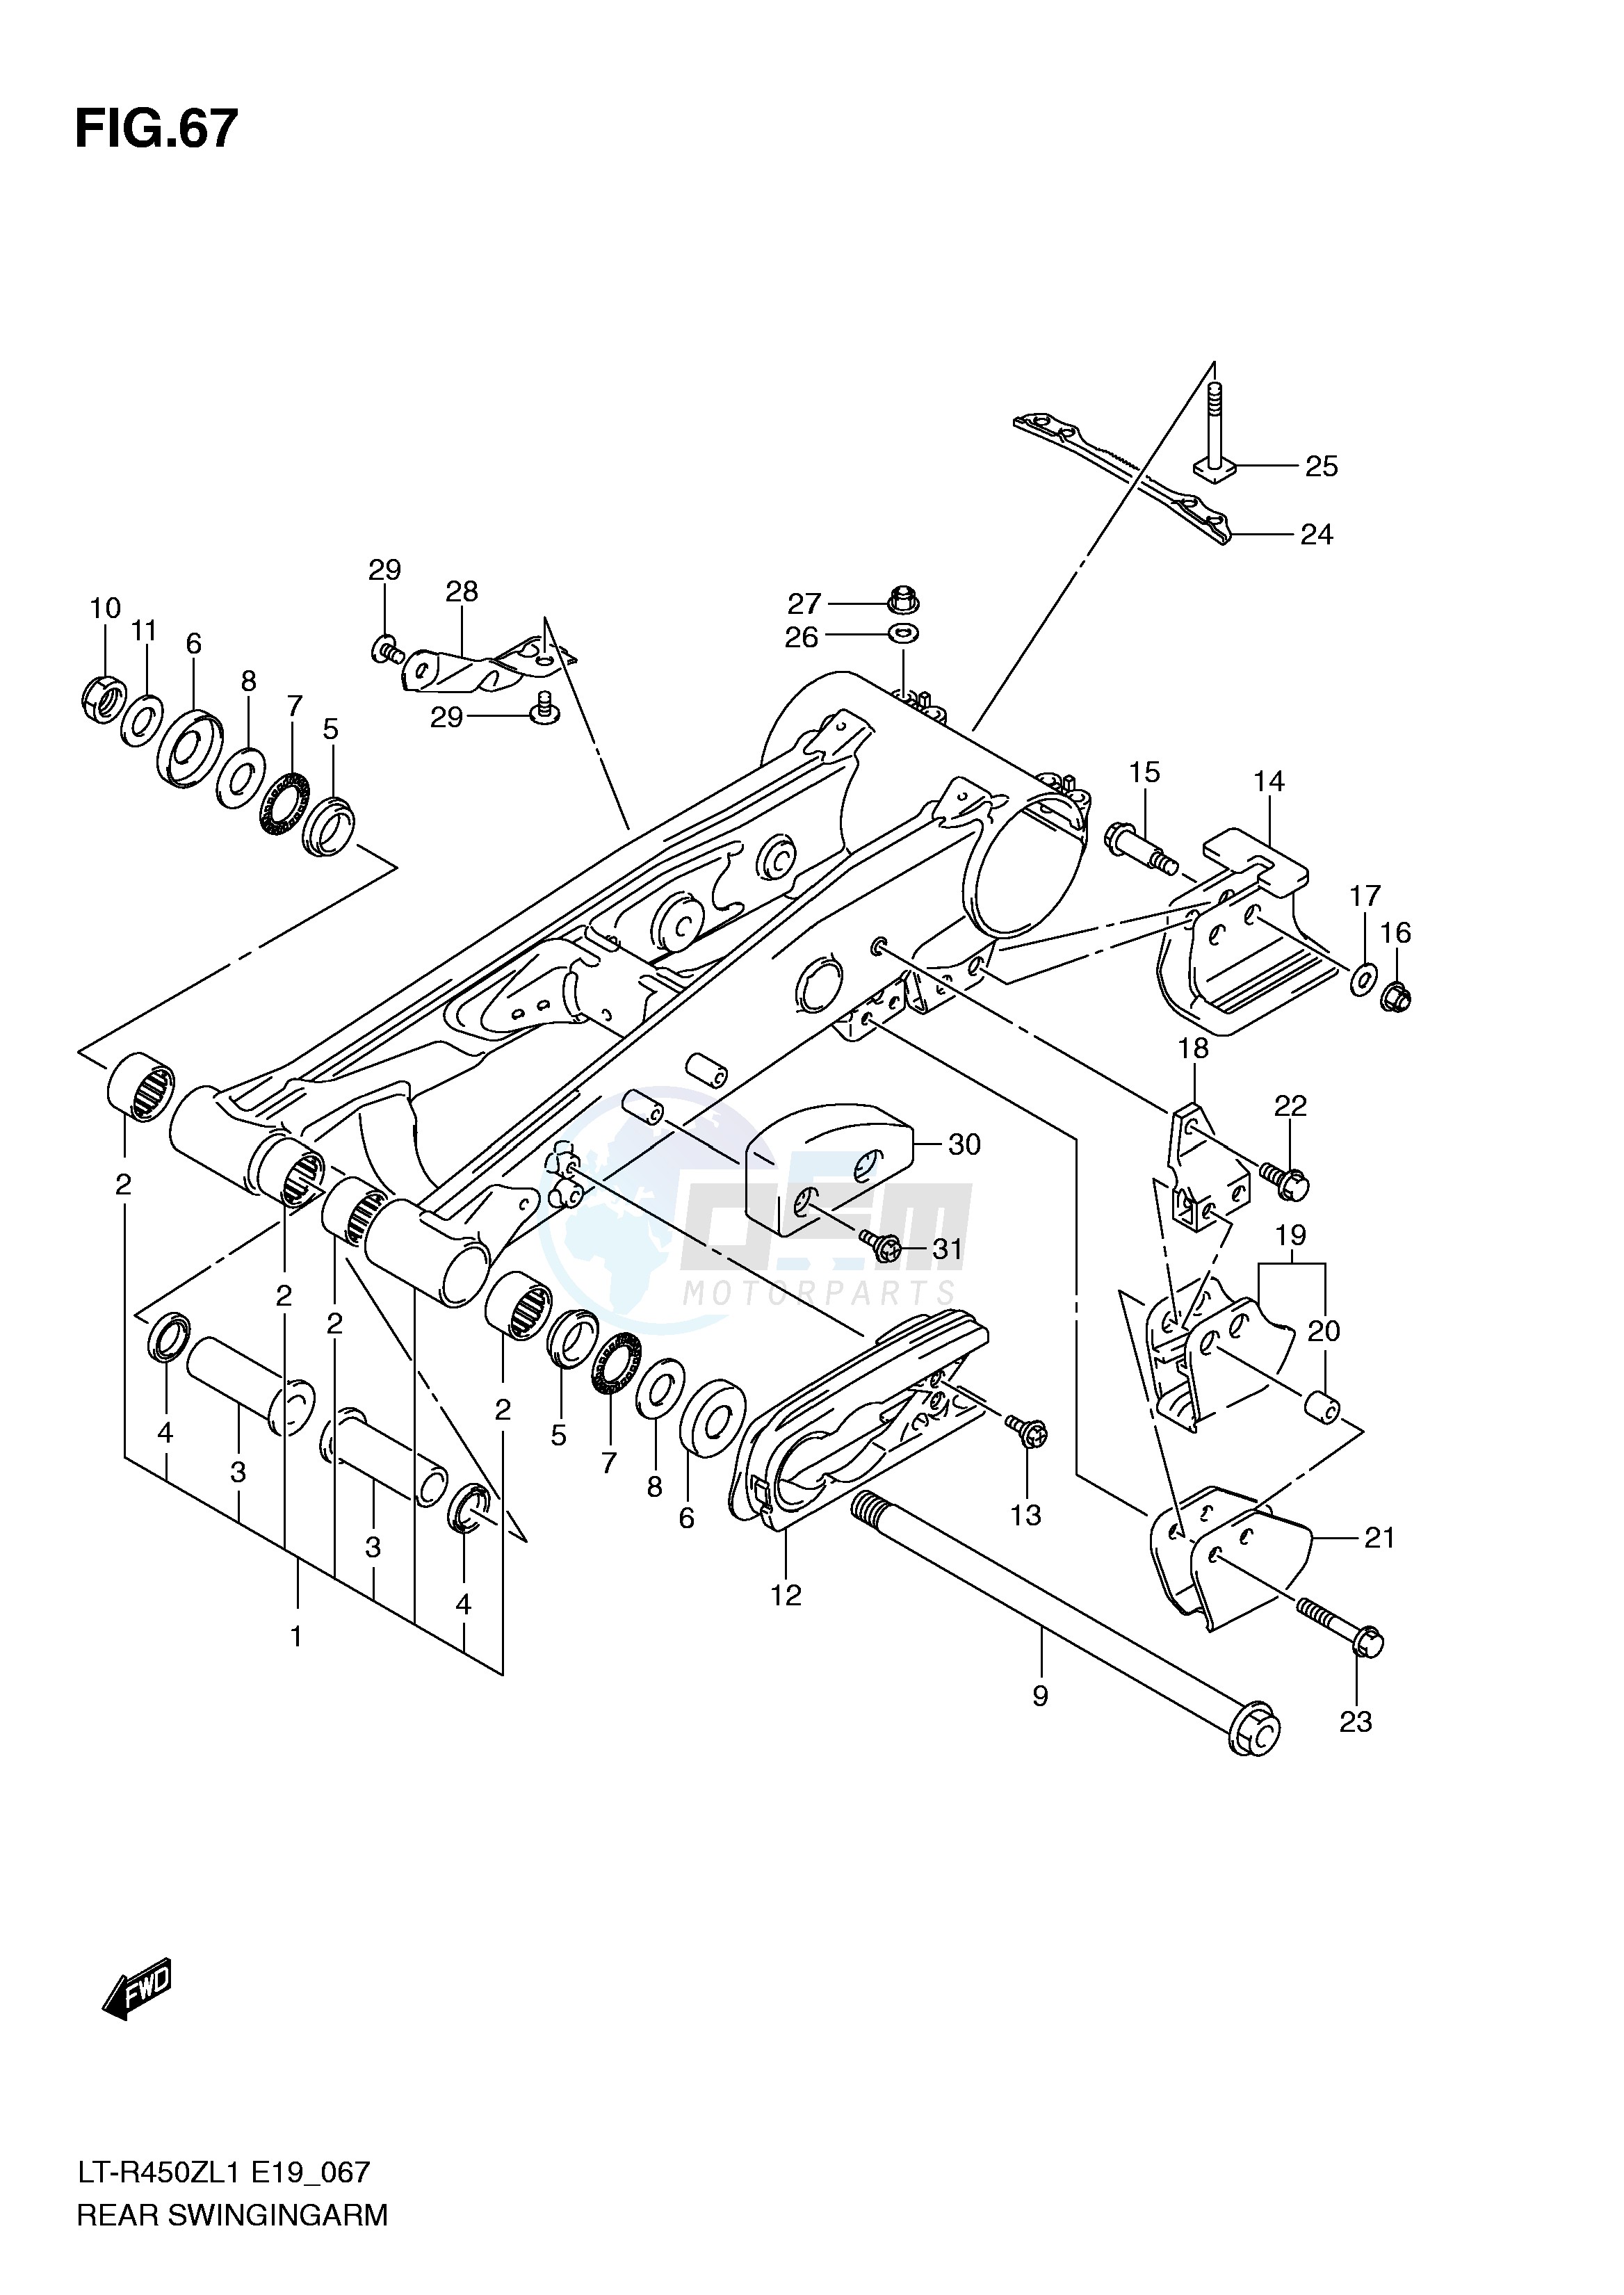 REAR SWINGING ARM (LT-R450L1 E19) blueprint